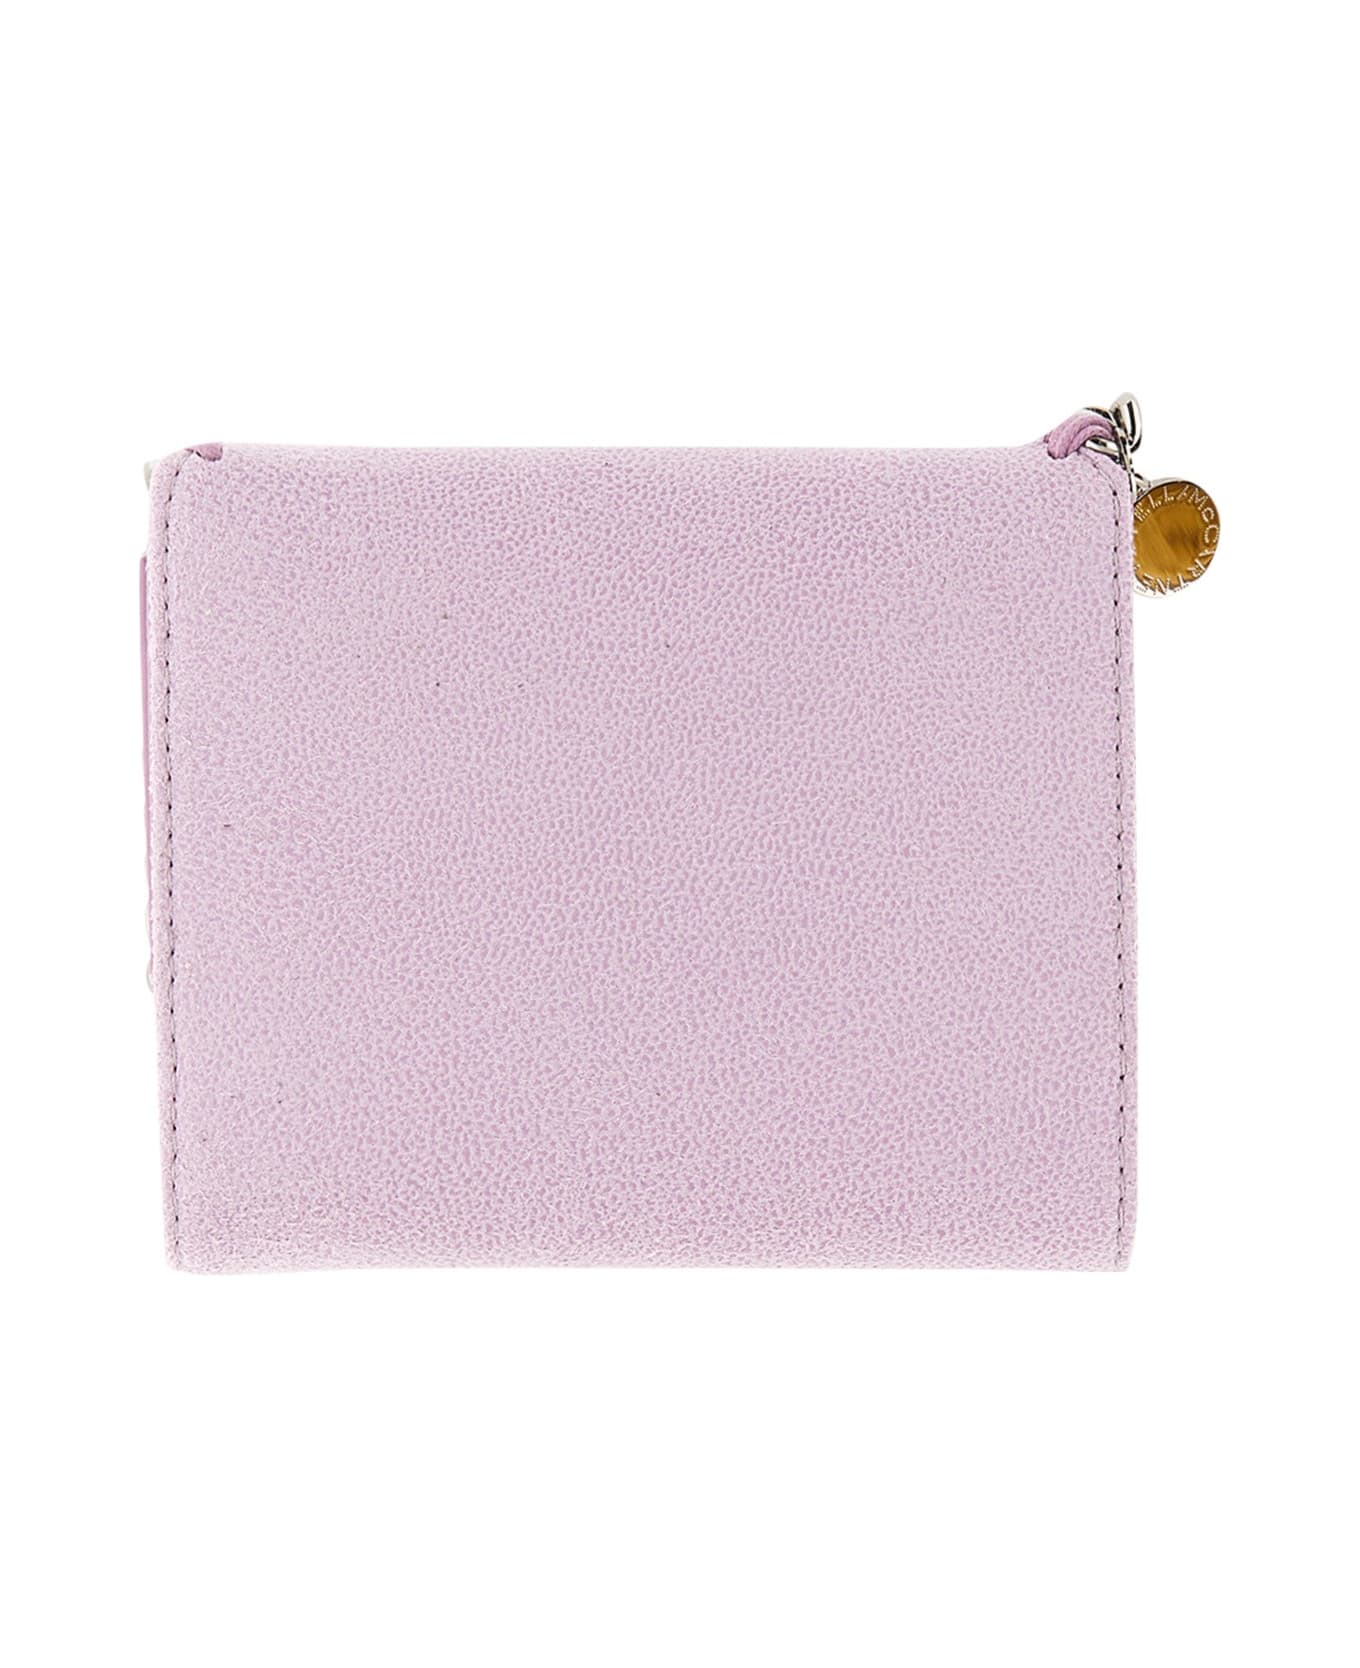 Stella McCartney Falabella Small Wallet - Lilac 財布